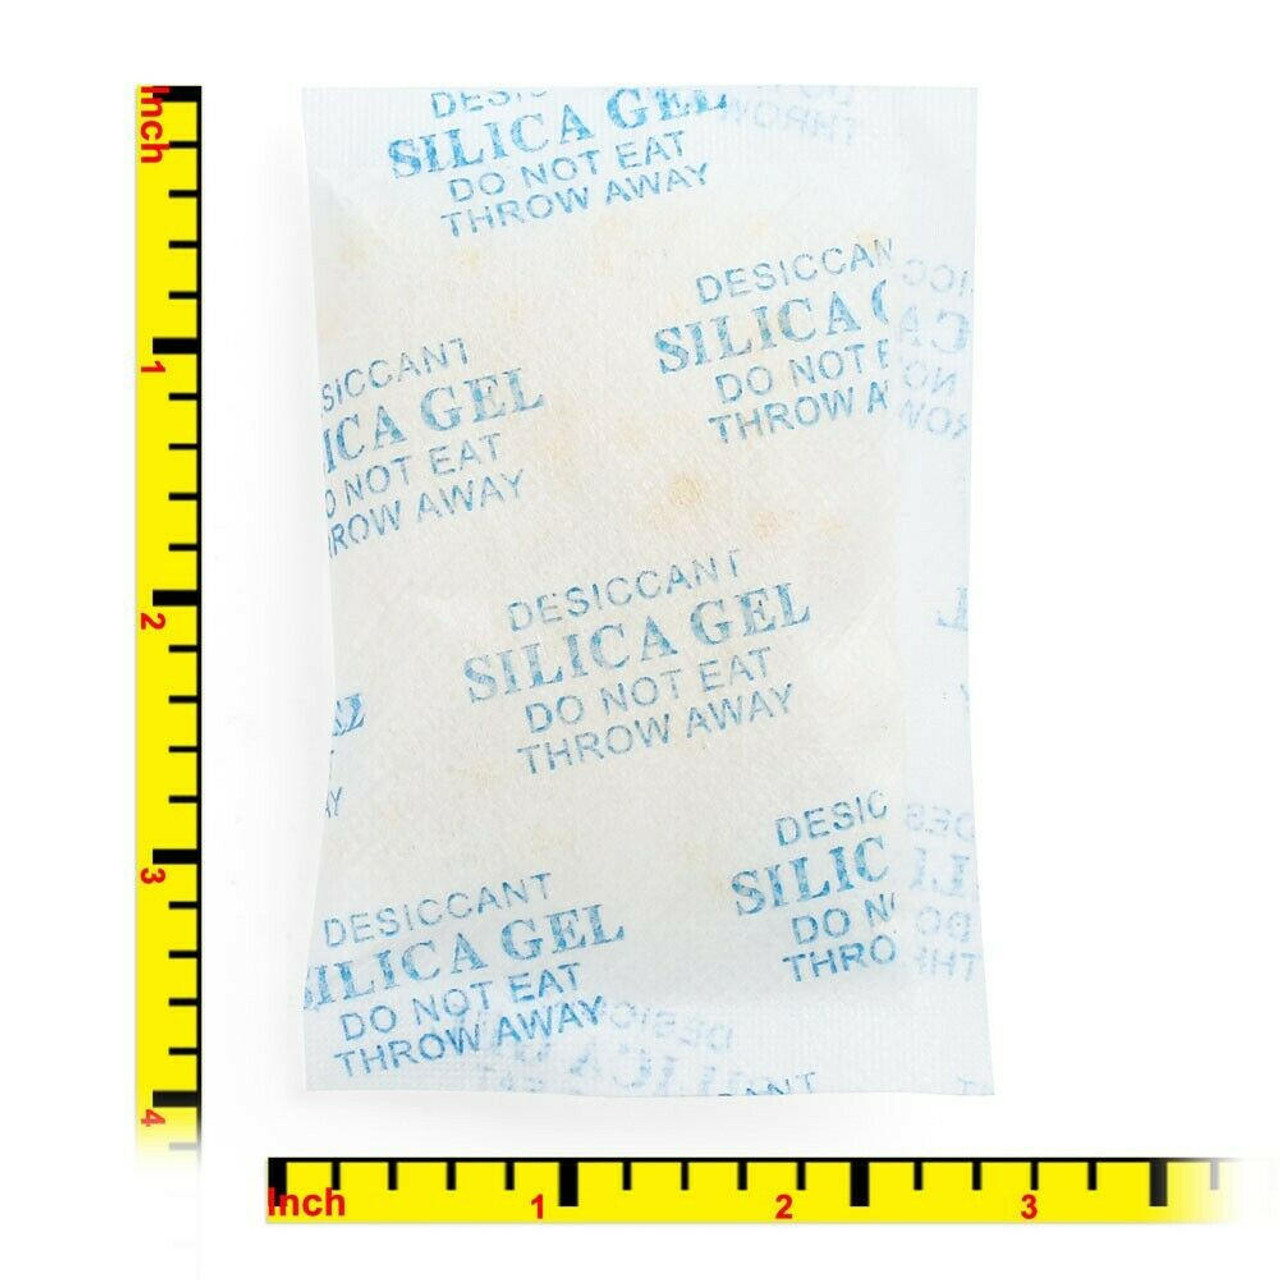 10g Gram Foil-Packed Silica Gel Desiccant Pack Moisture Absorber Packets x  32pcs - Redstag Supplies